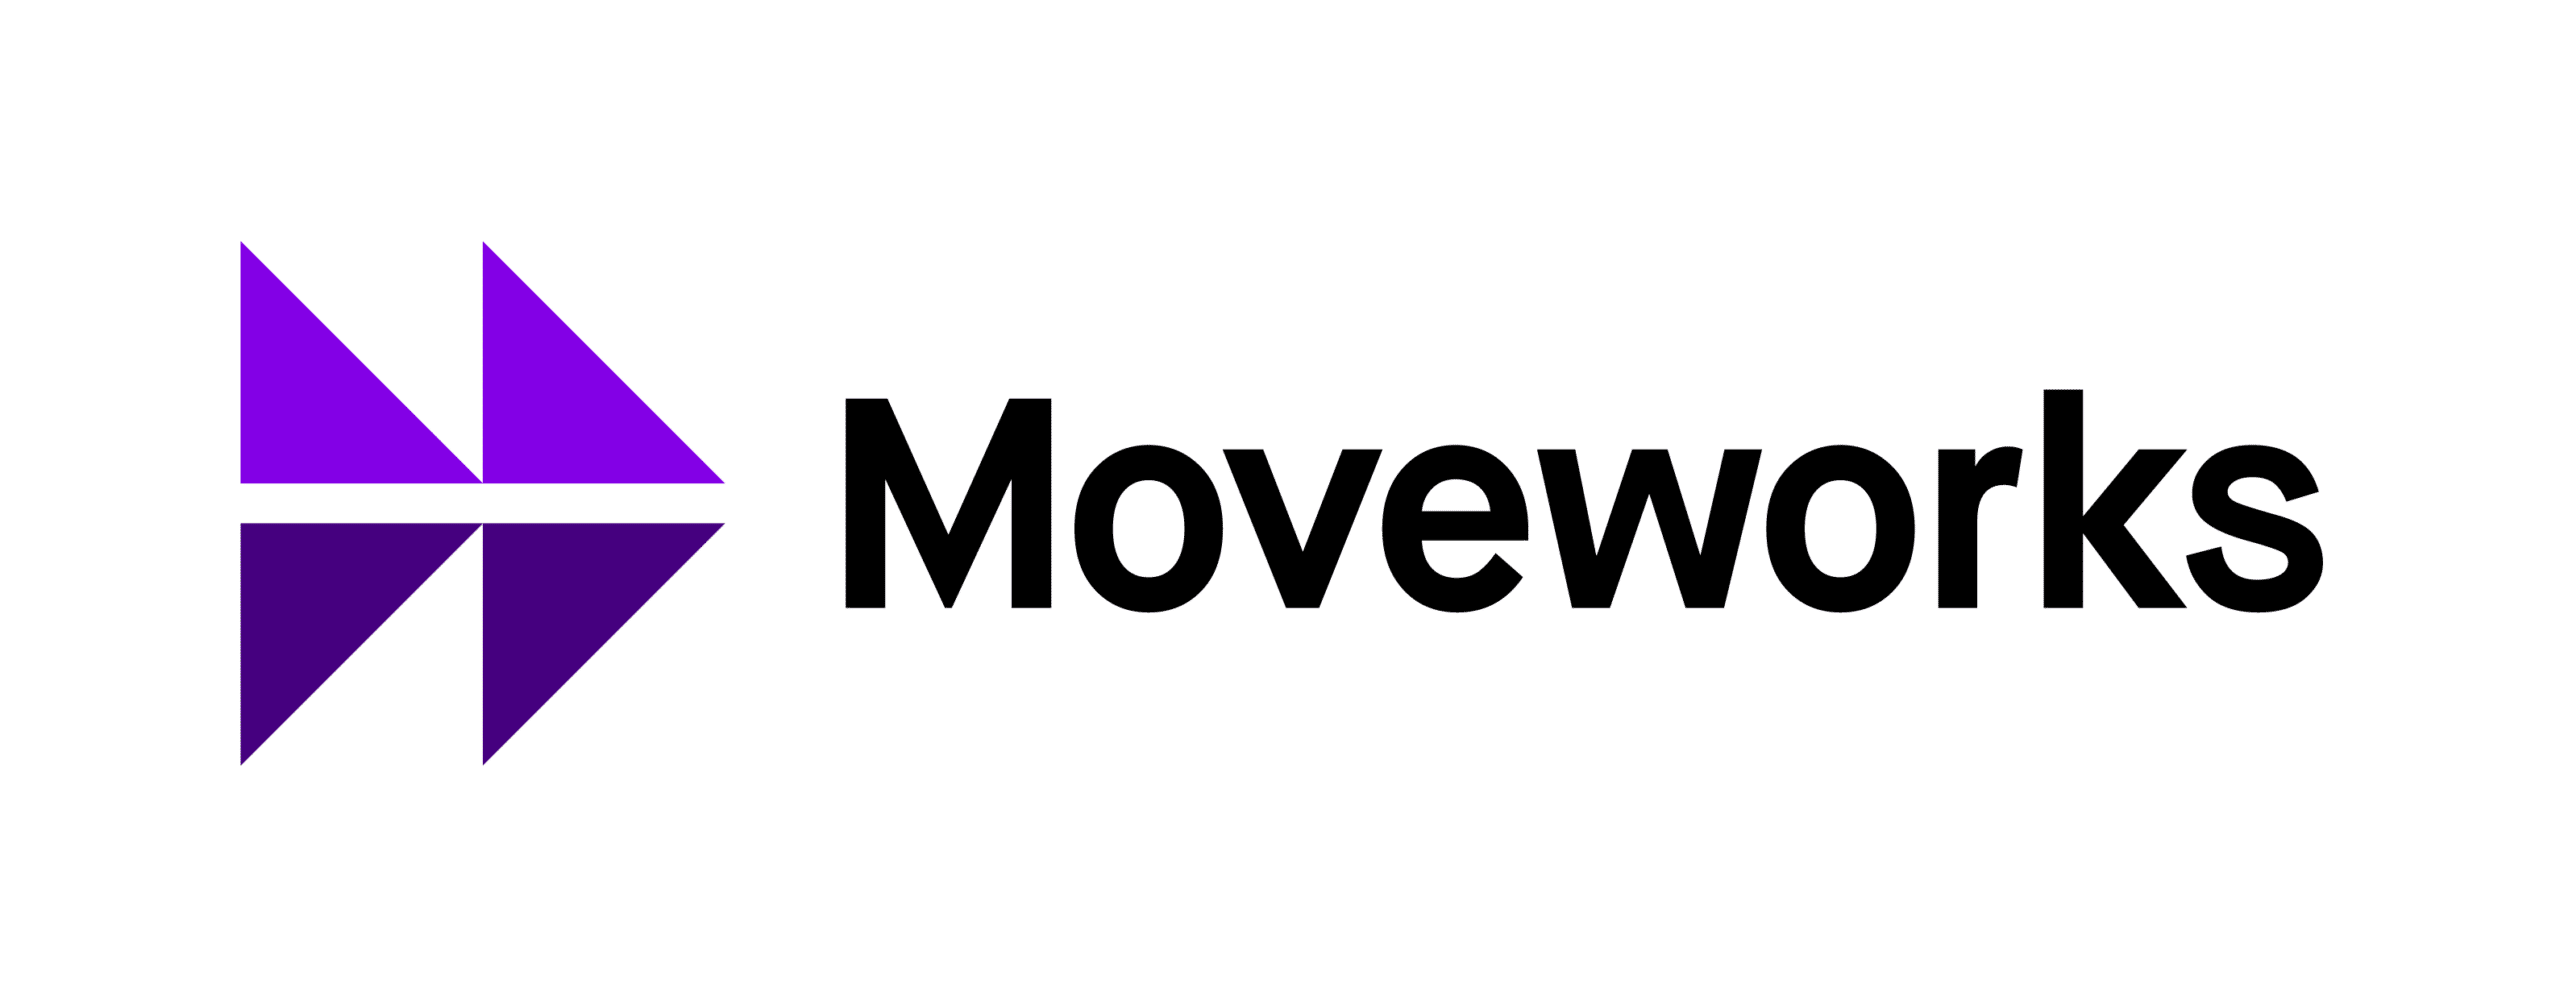 Moveworks logo